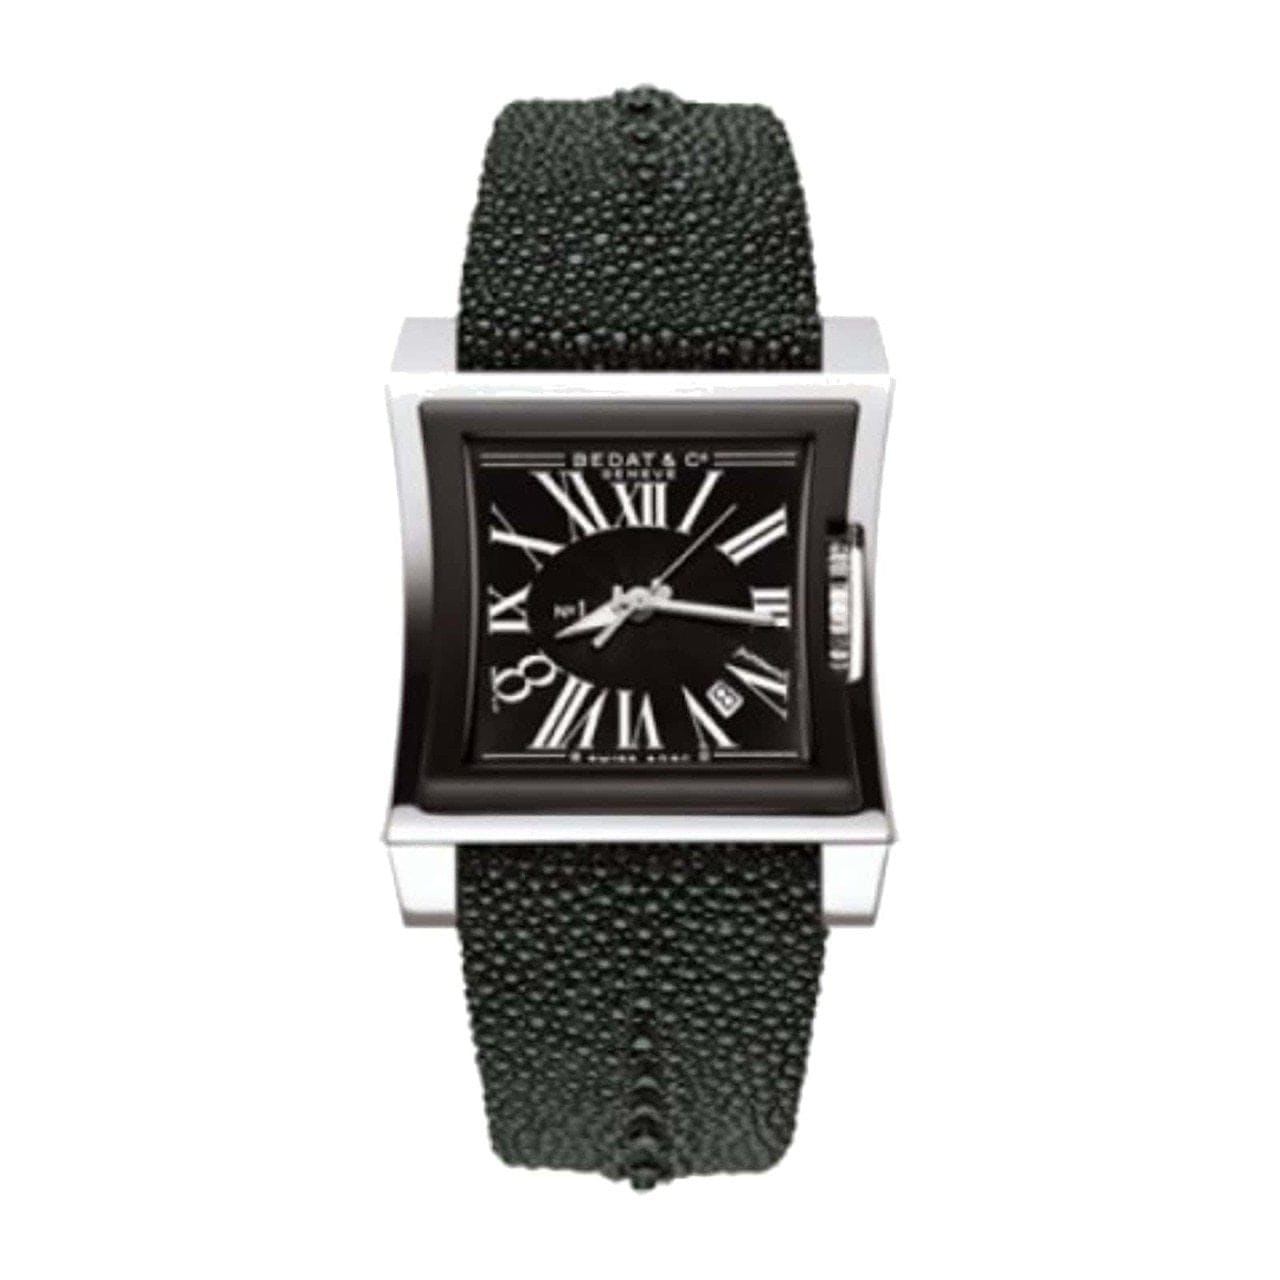 Bedat & Co. 114.062.300 No. 1 Black Dial Men's Crocodile Leather Automatic Watch